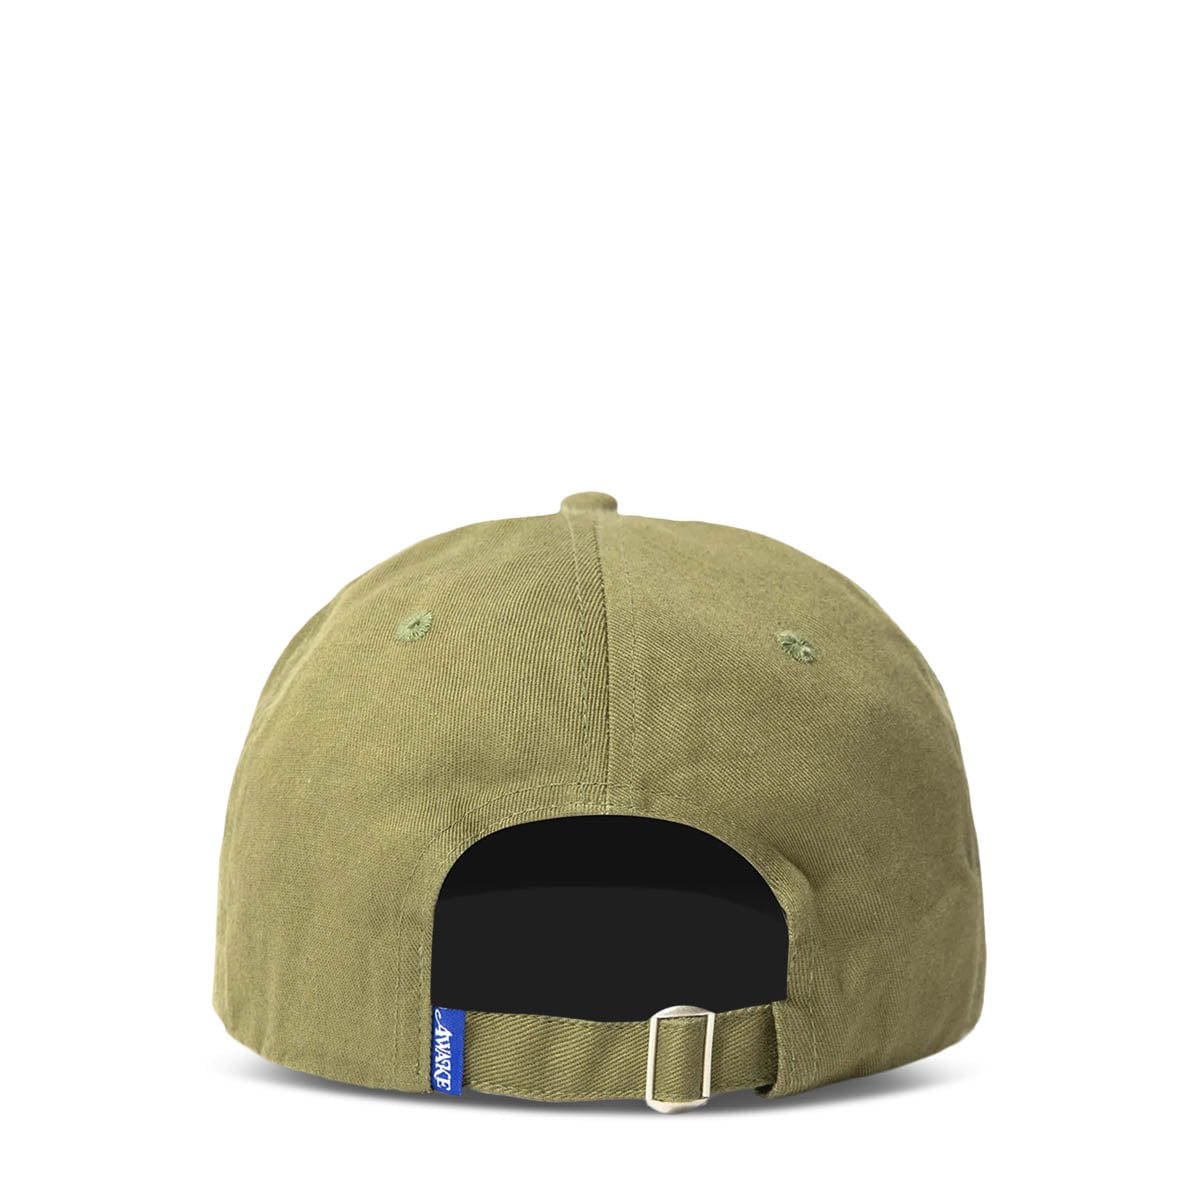 6 PANEL SUPREME ARABIC LOGO OLIVE CAP HAT CAPS CASQUETTE CAMP NEW